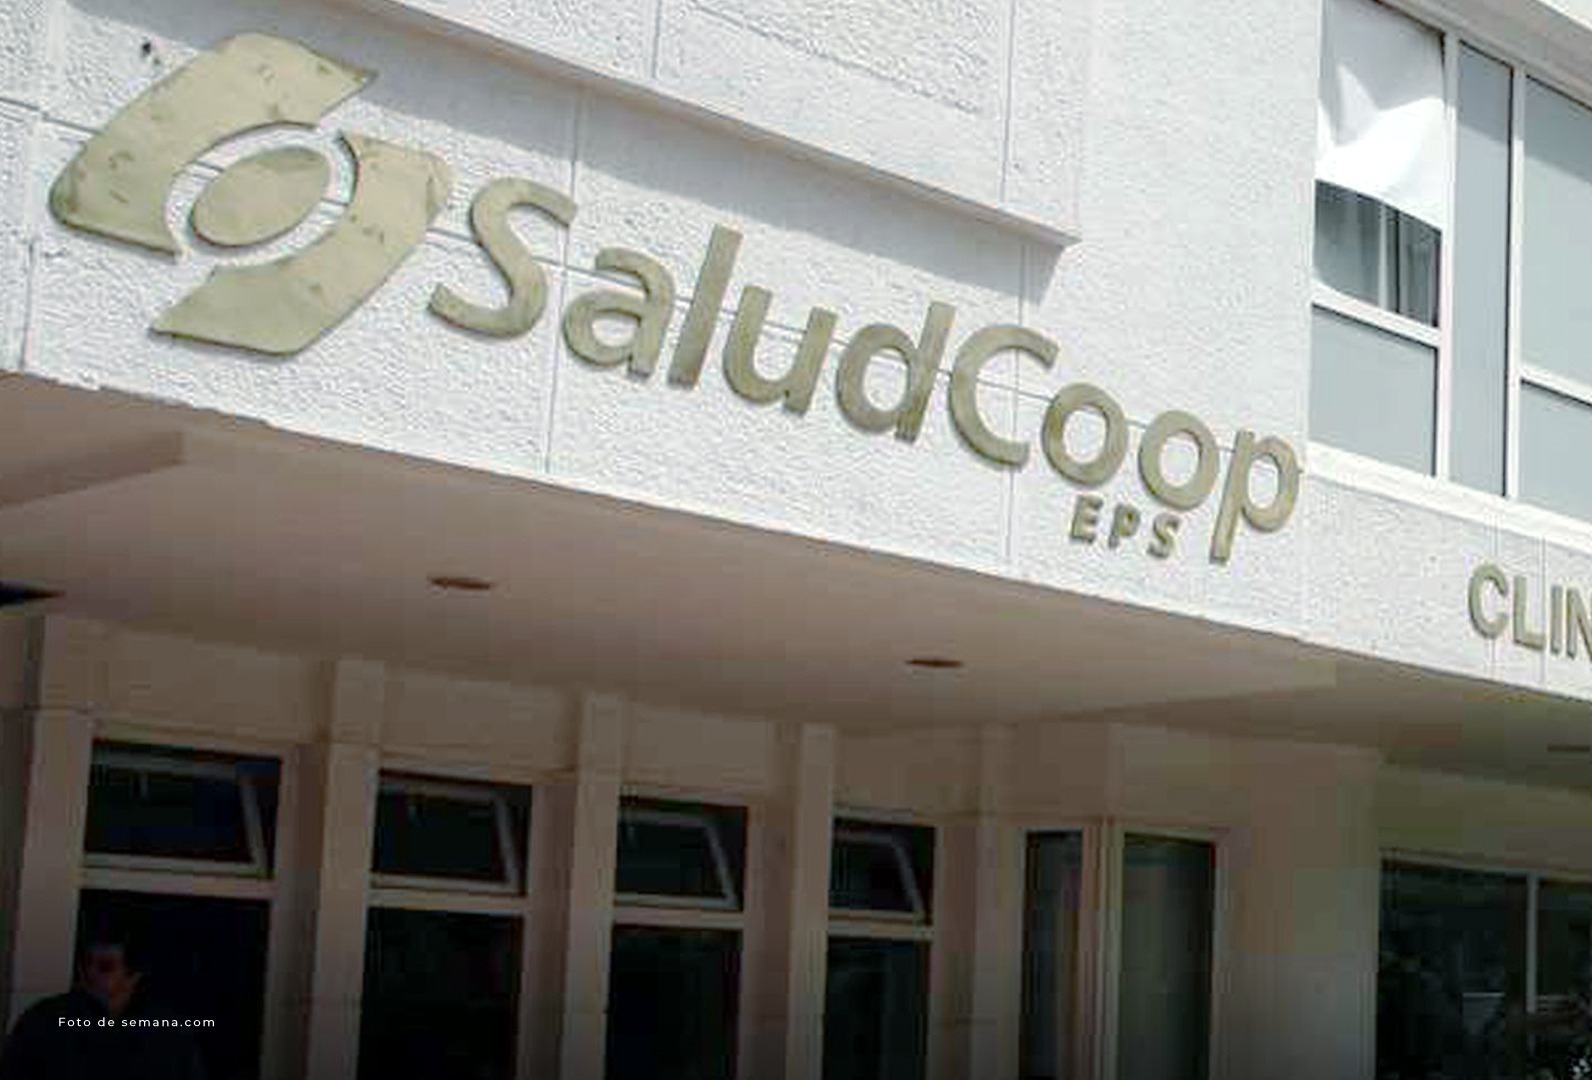 SaludCoop